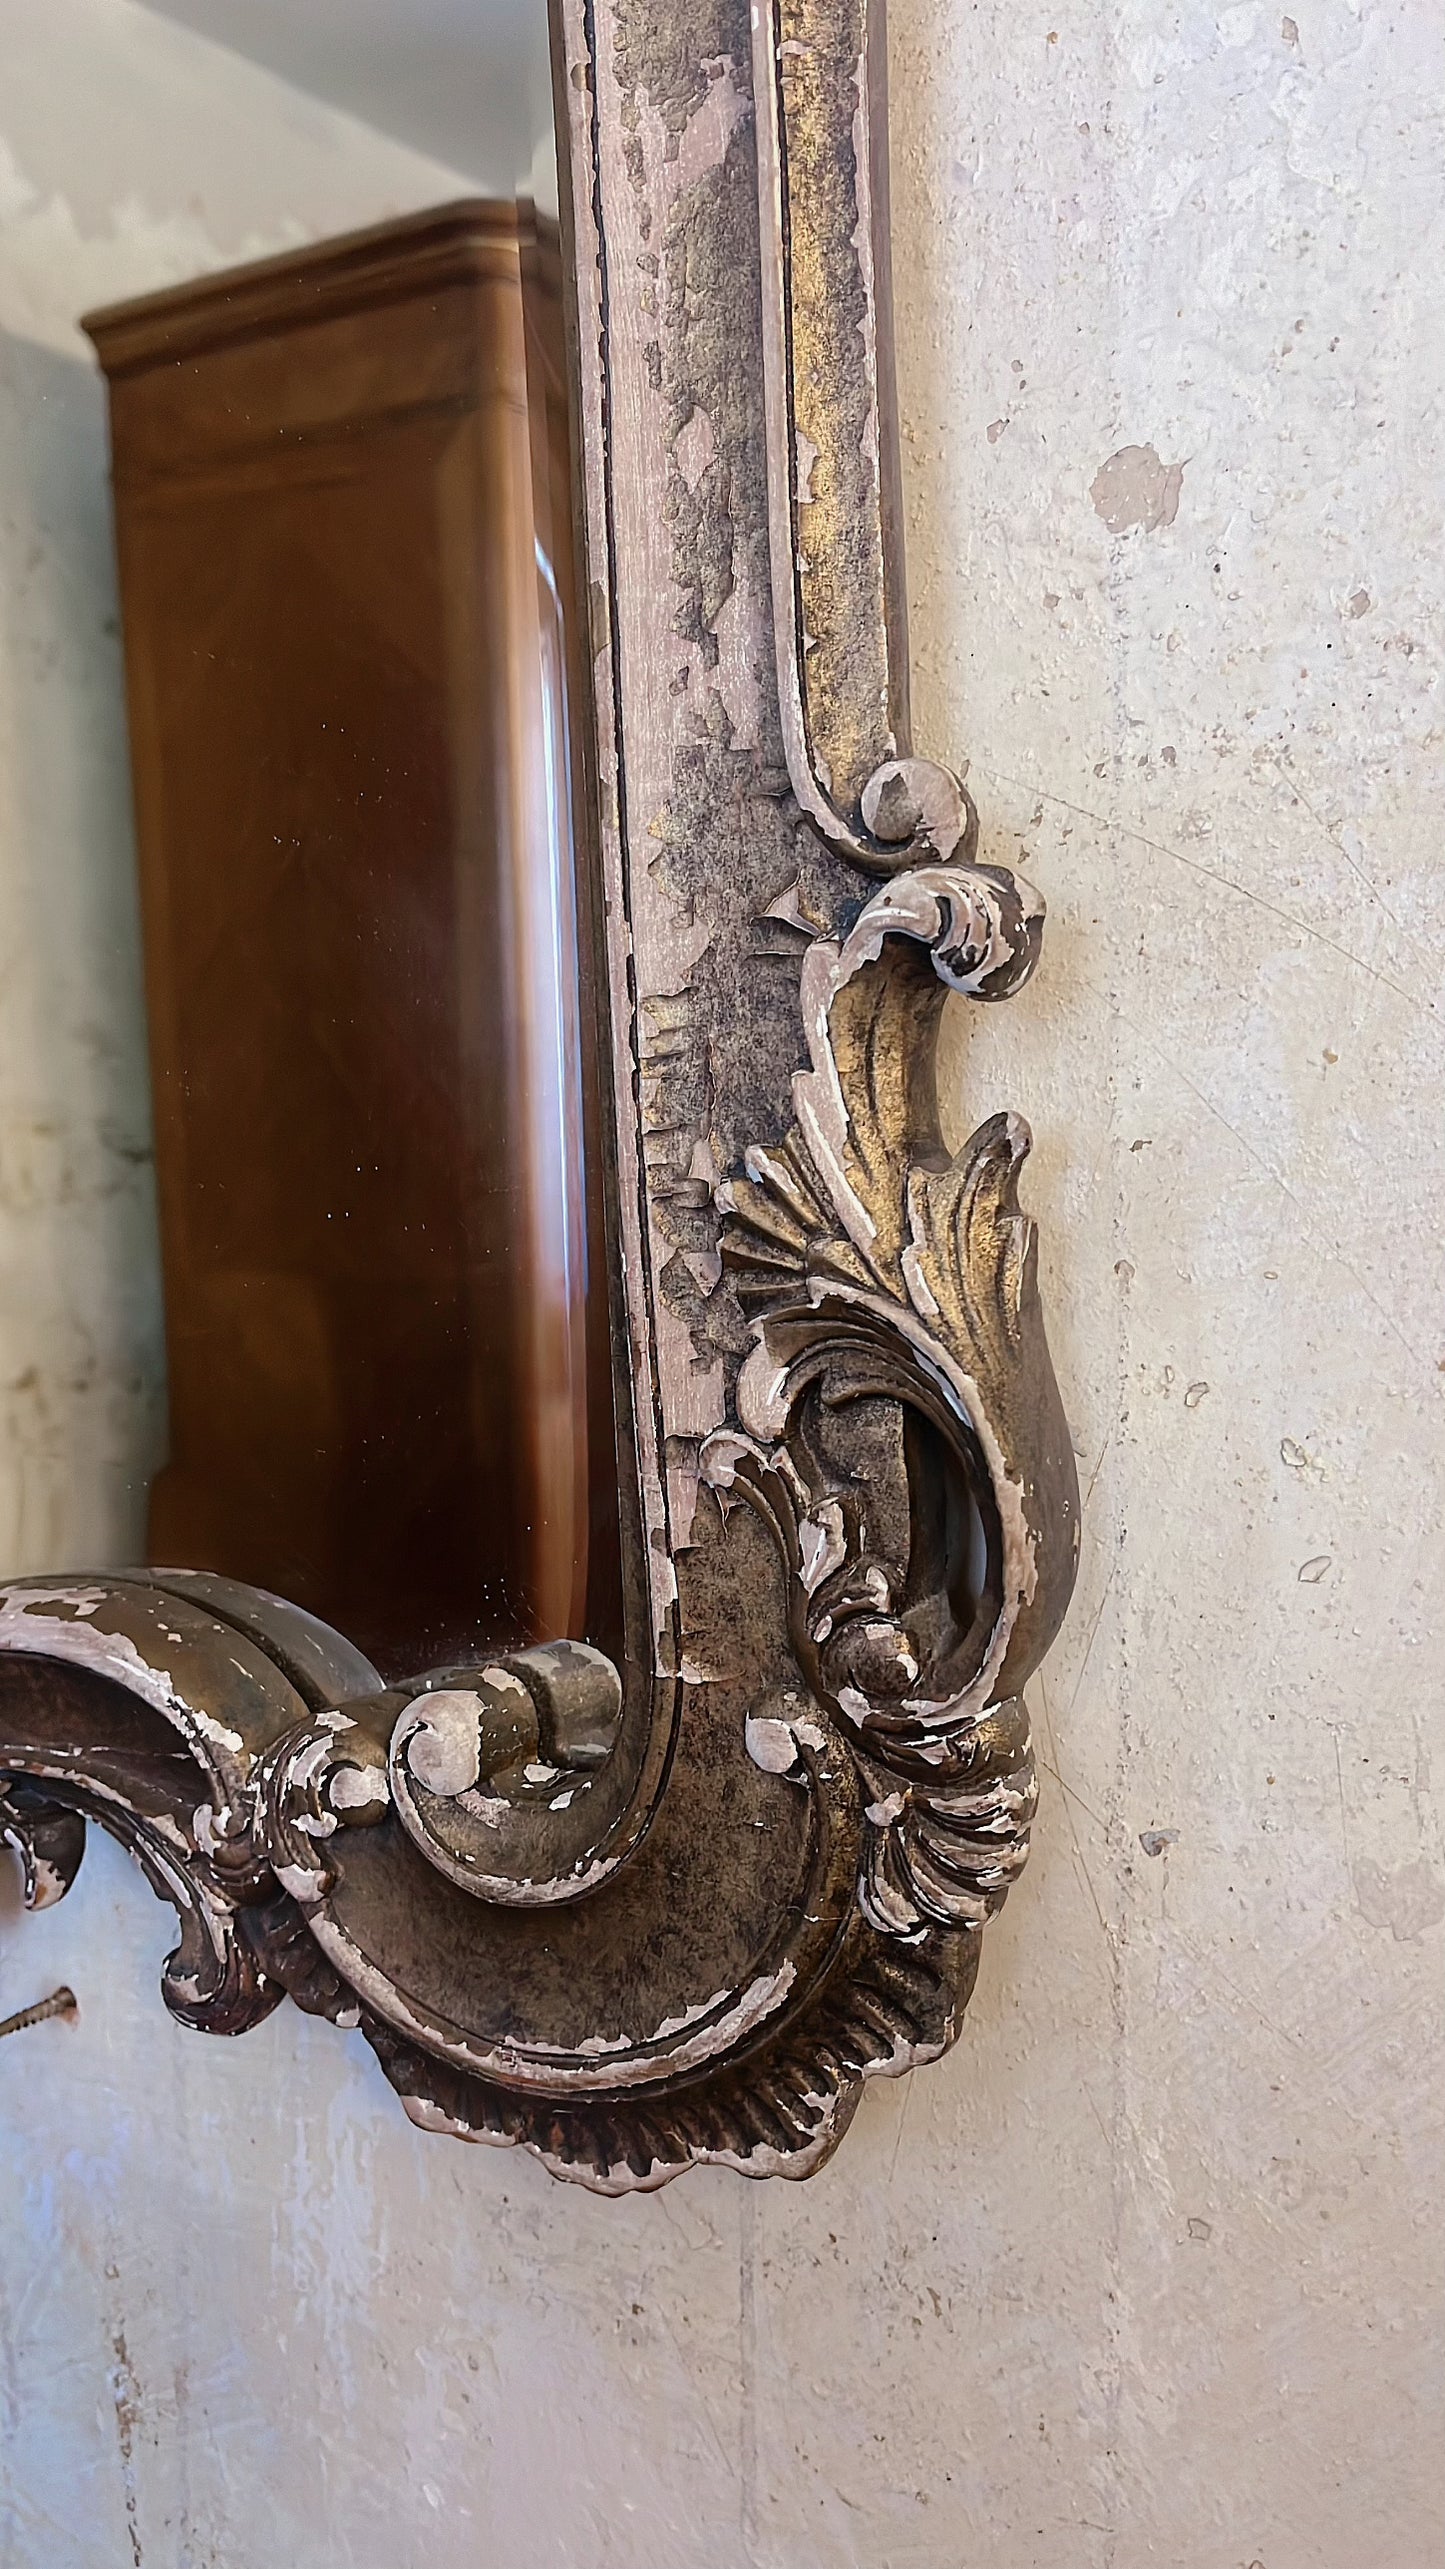 Ornate antique gold mirror